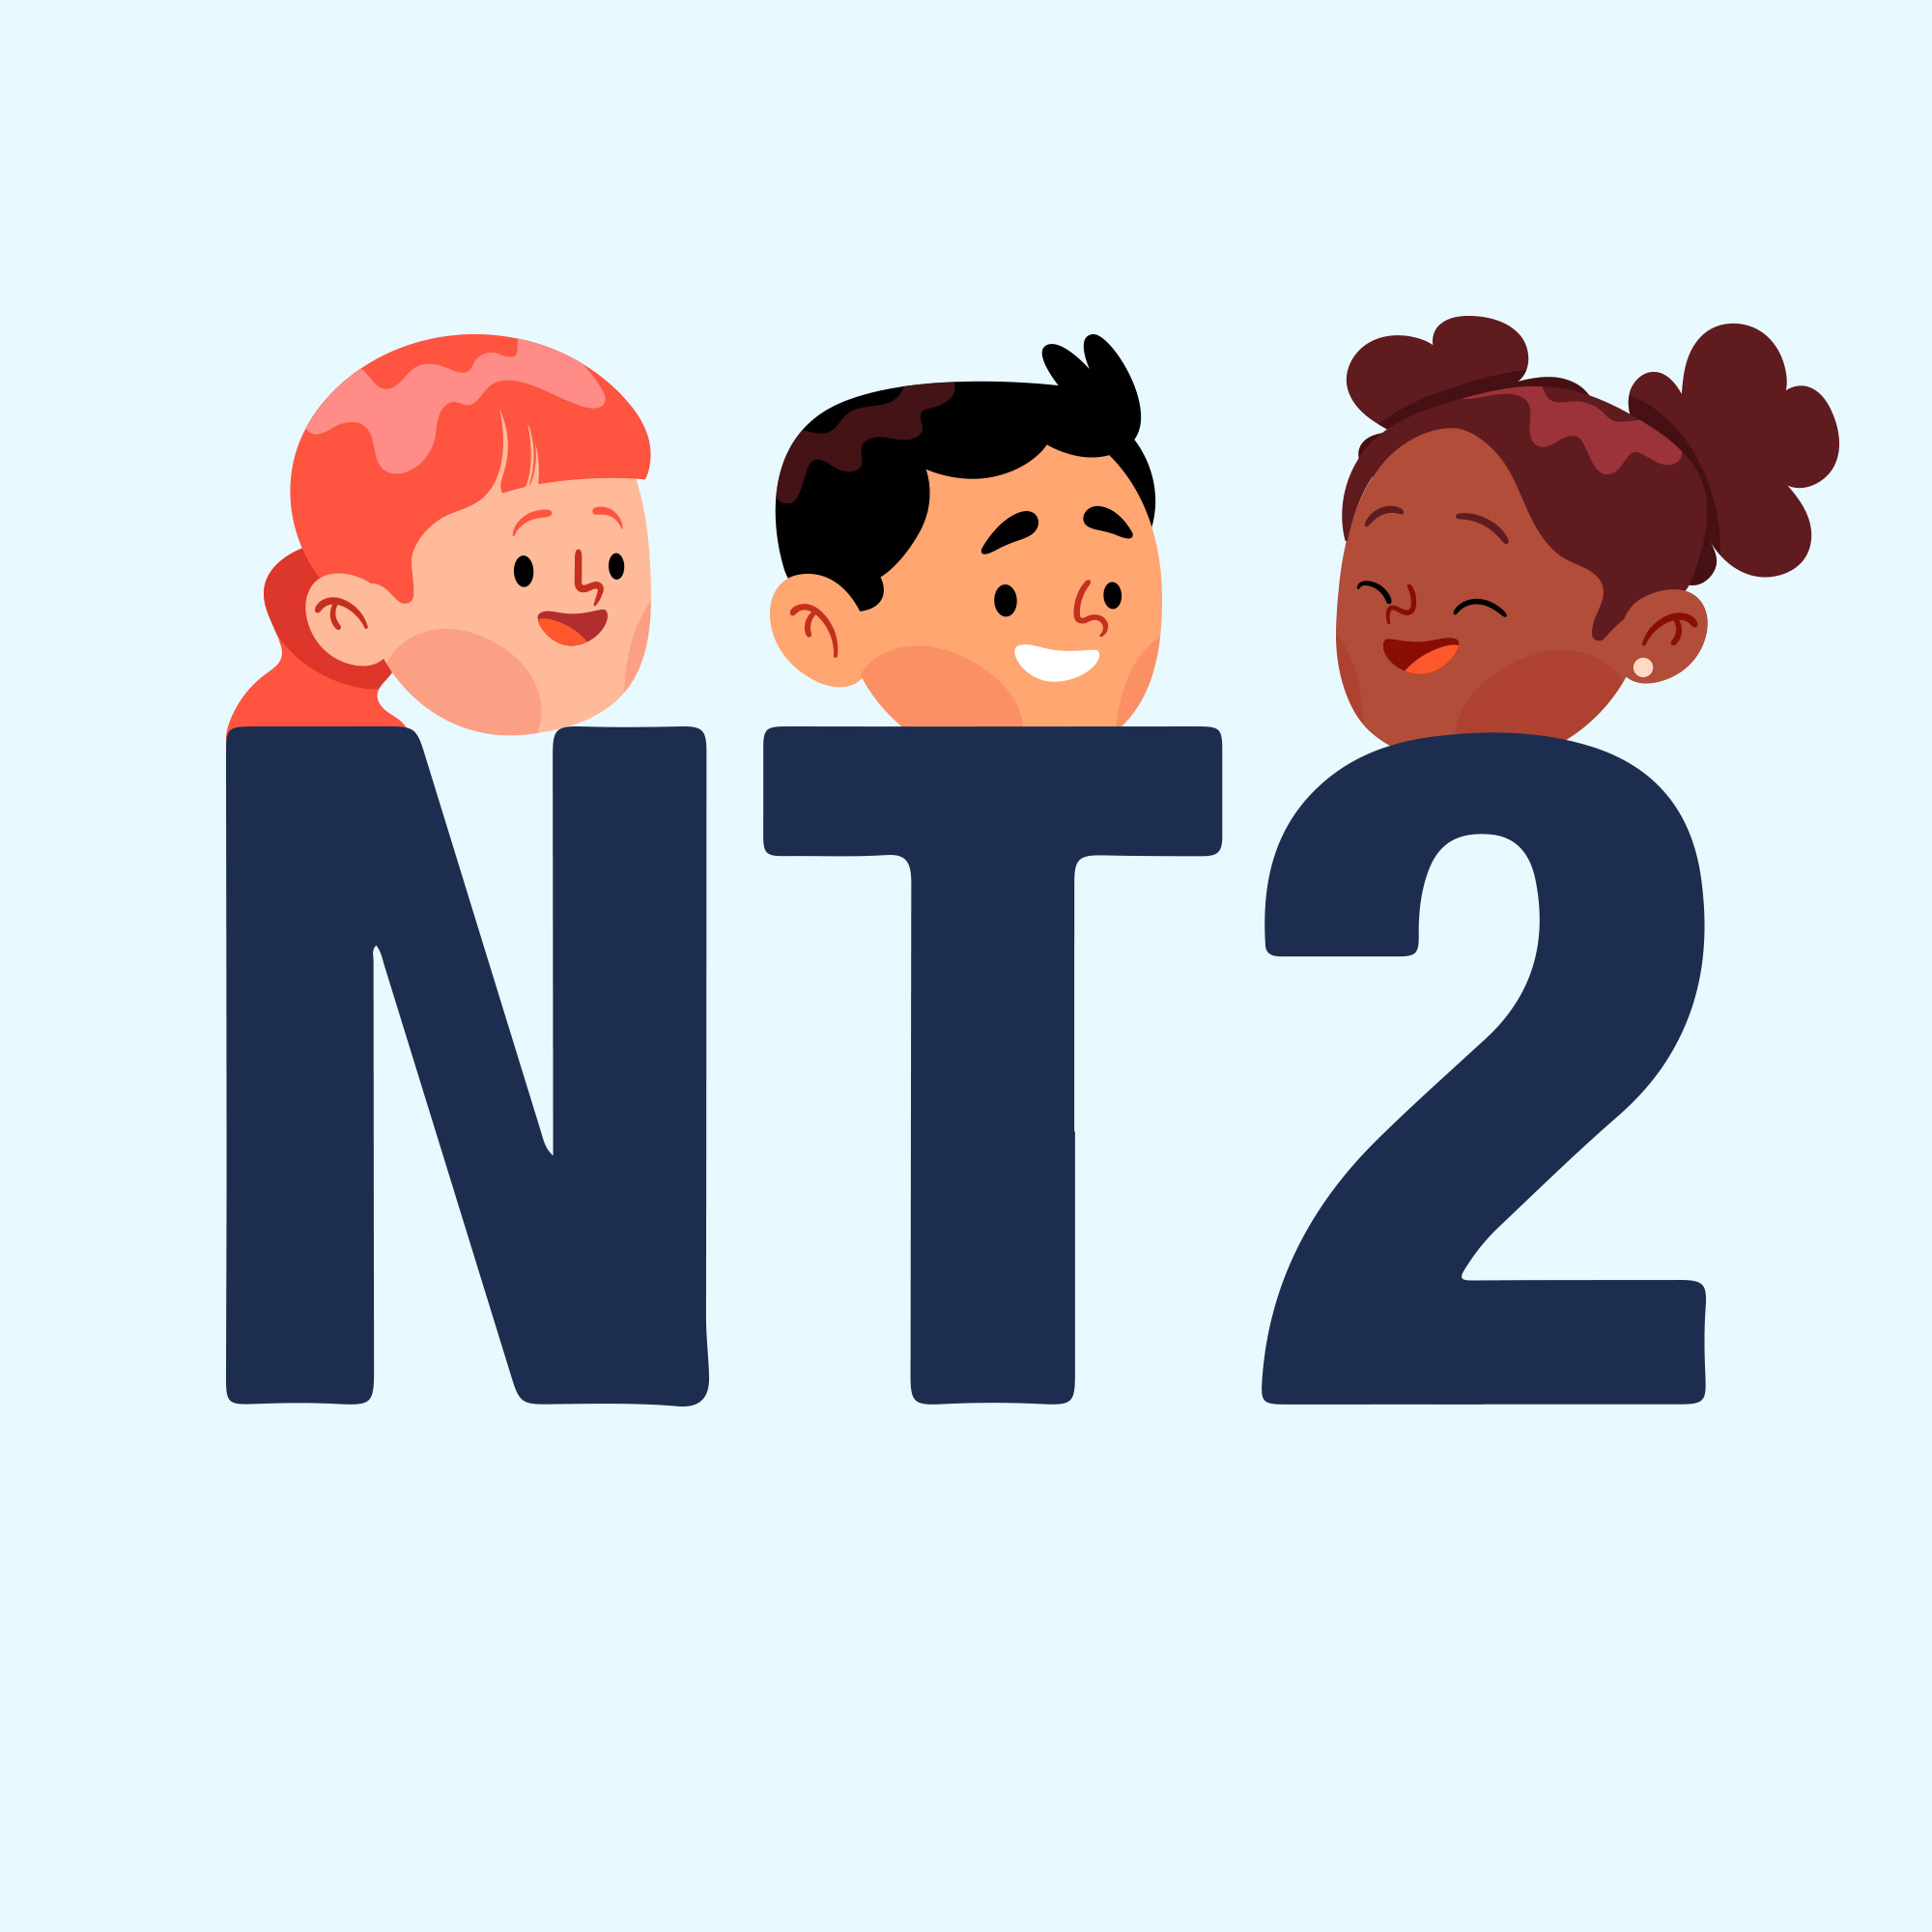 NT2